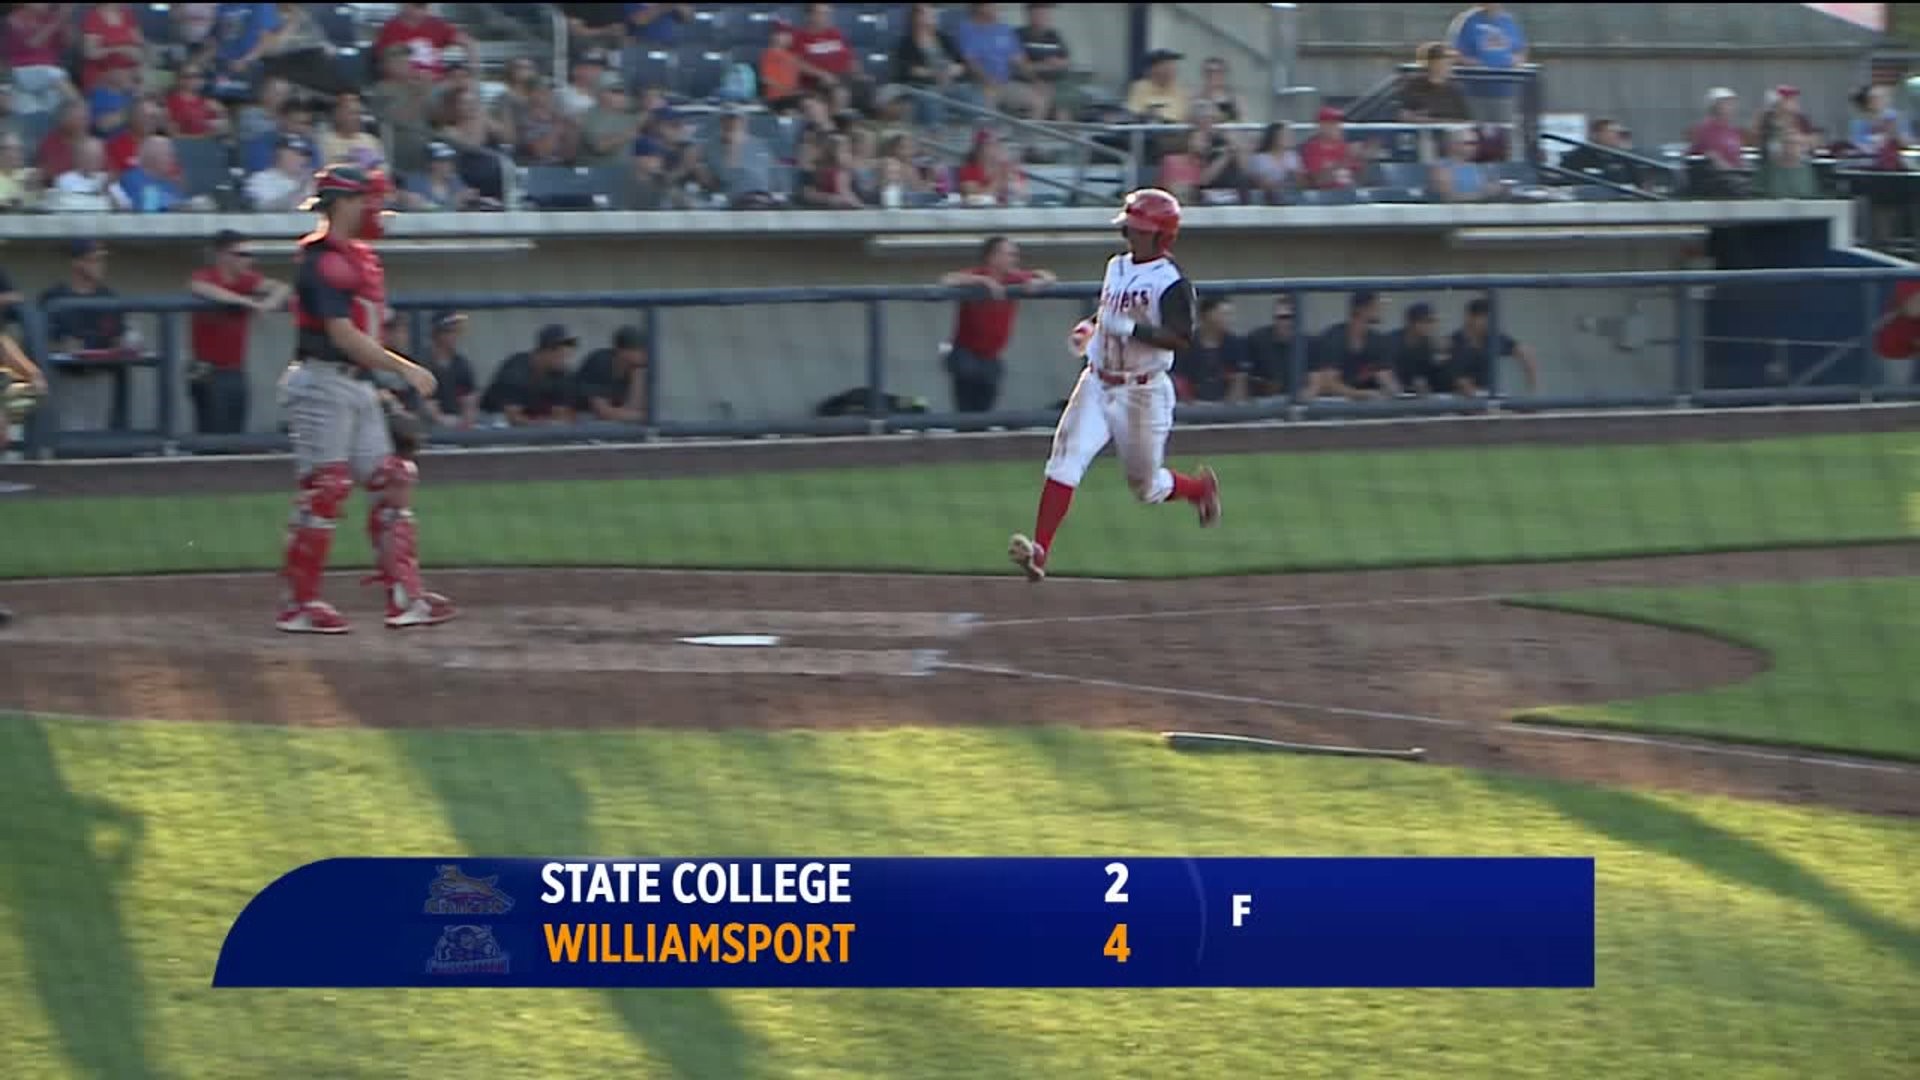 State College vs Williamsport baseball